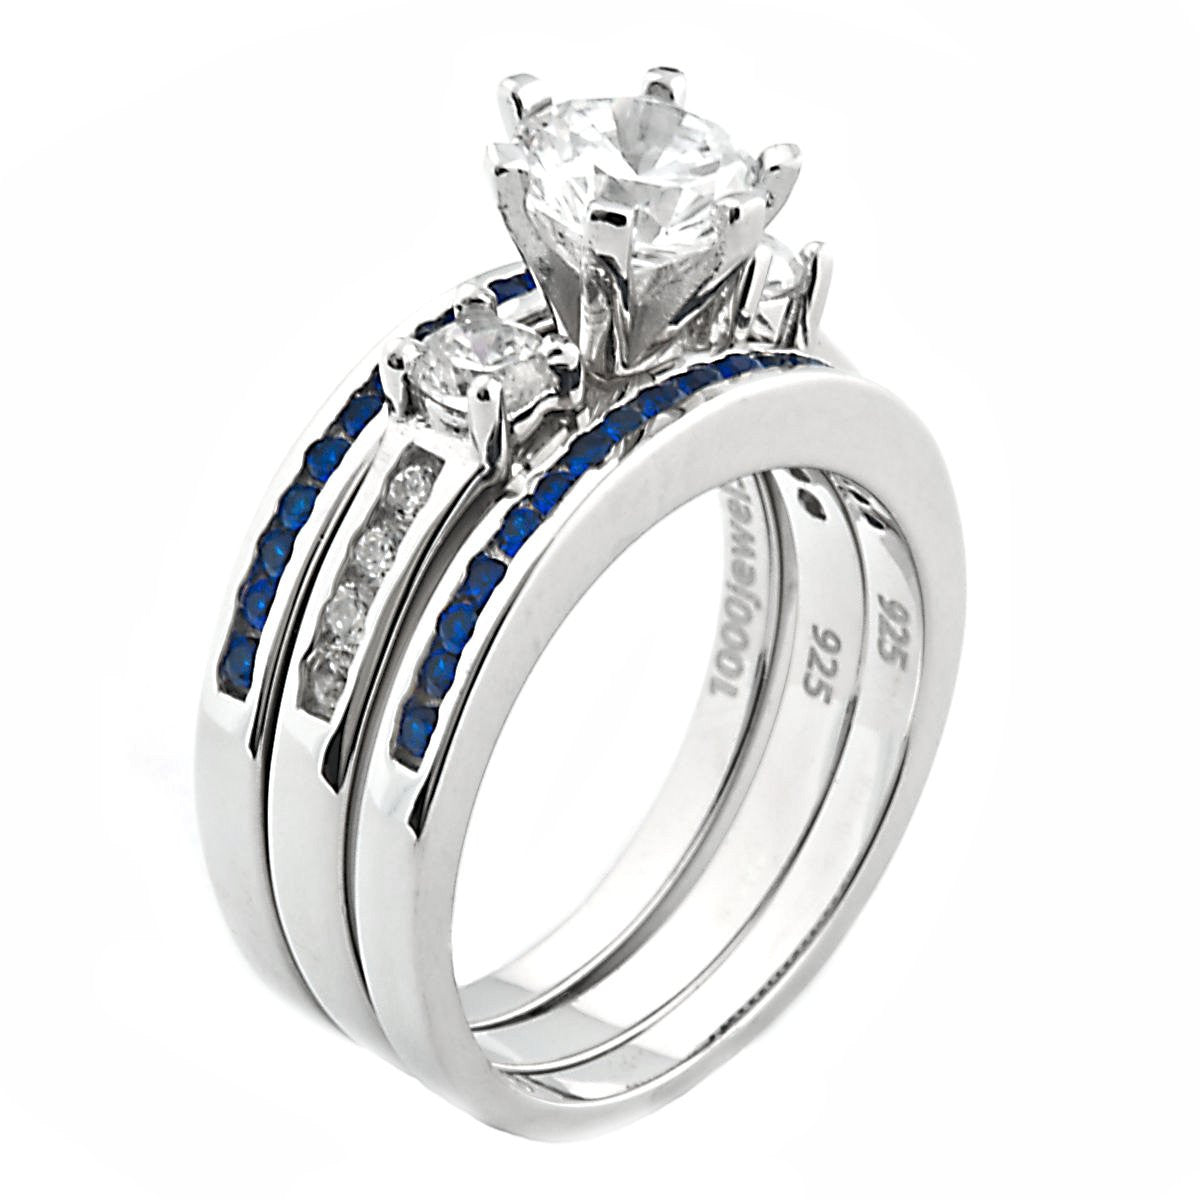 Lakoda 3SA: Stunning 1.58c IOF - 3 Trustmark Jewelers Ring CZ Wedding Set Pc and Sapphire